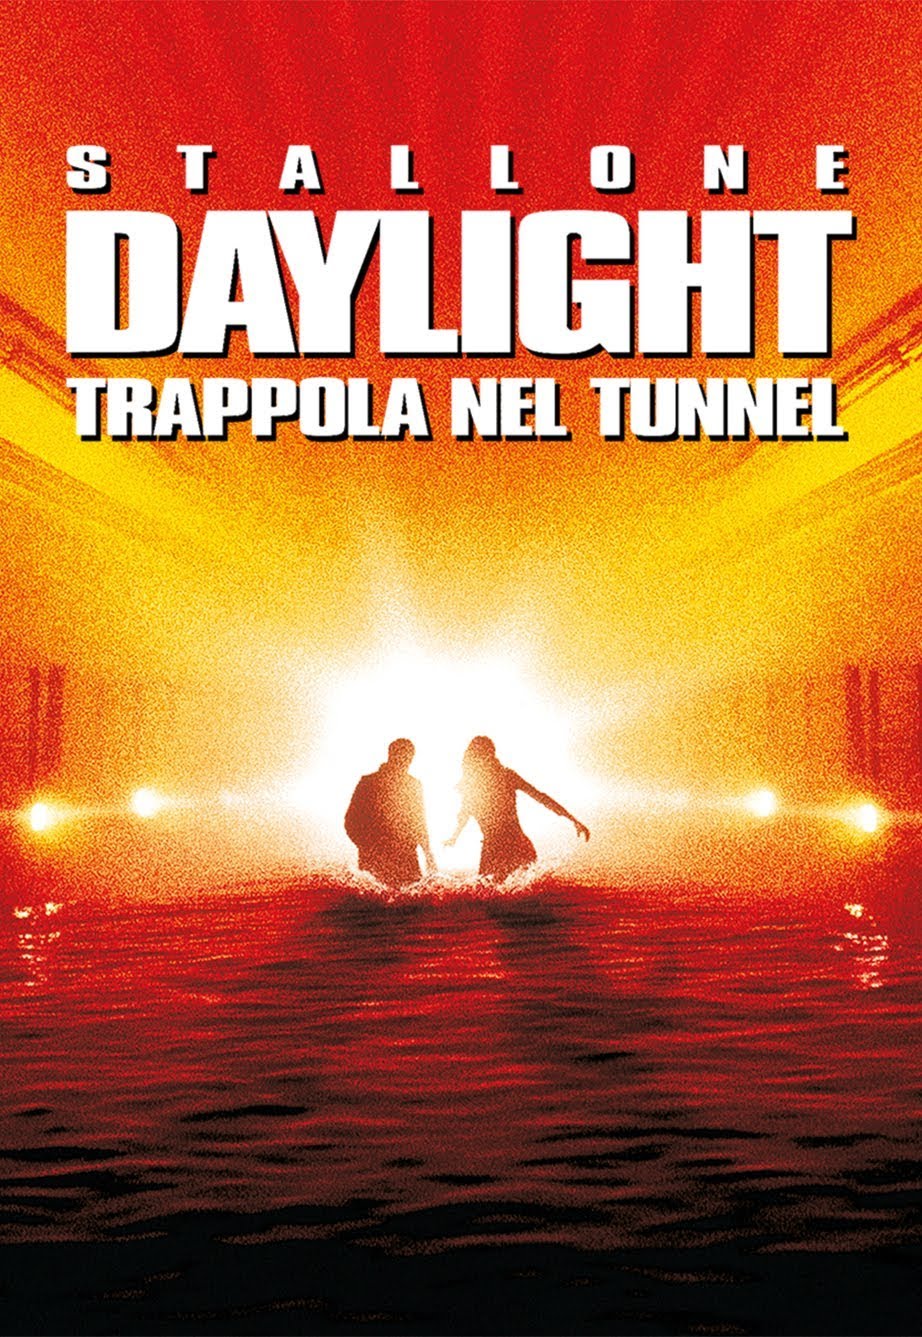 Daylight – Trappola nel tunnel [HD] (1996)